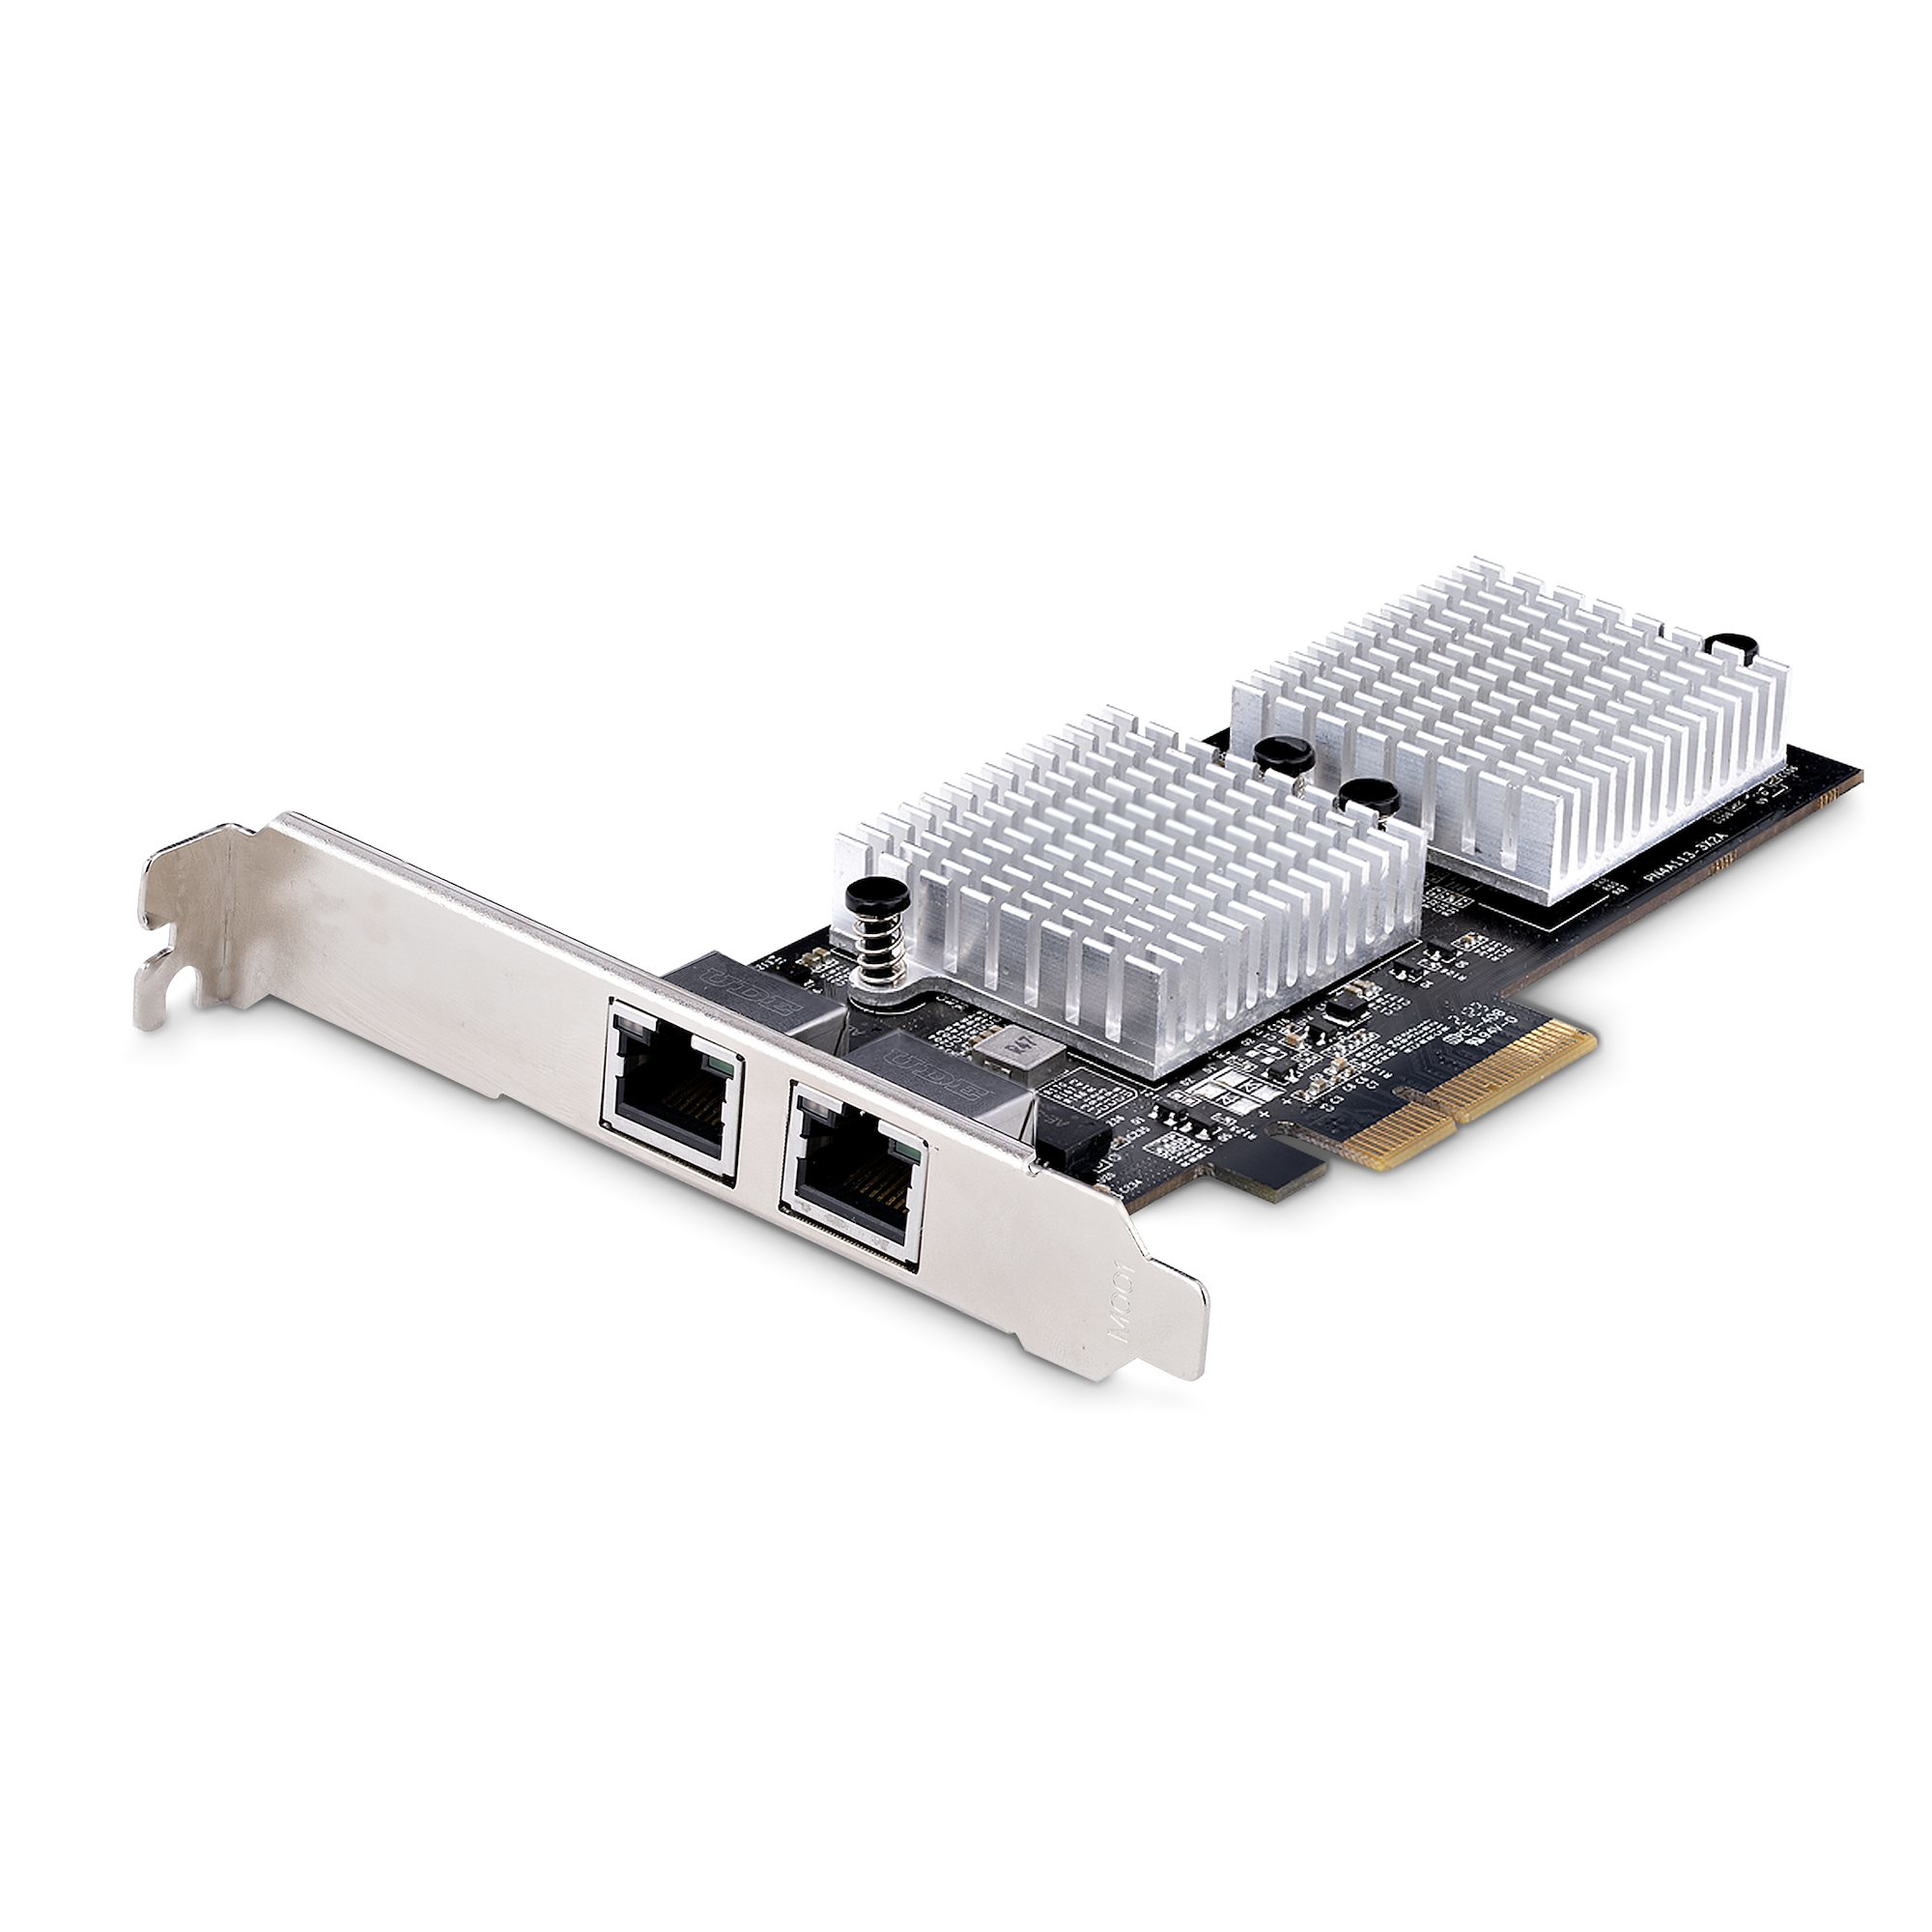 StarTech.com 2-Port 10GbE PCIe Network Adapter Card